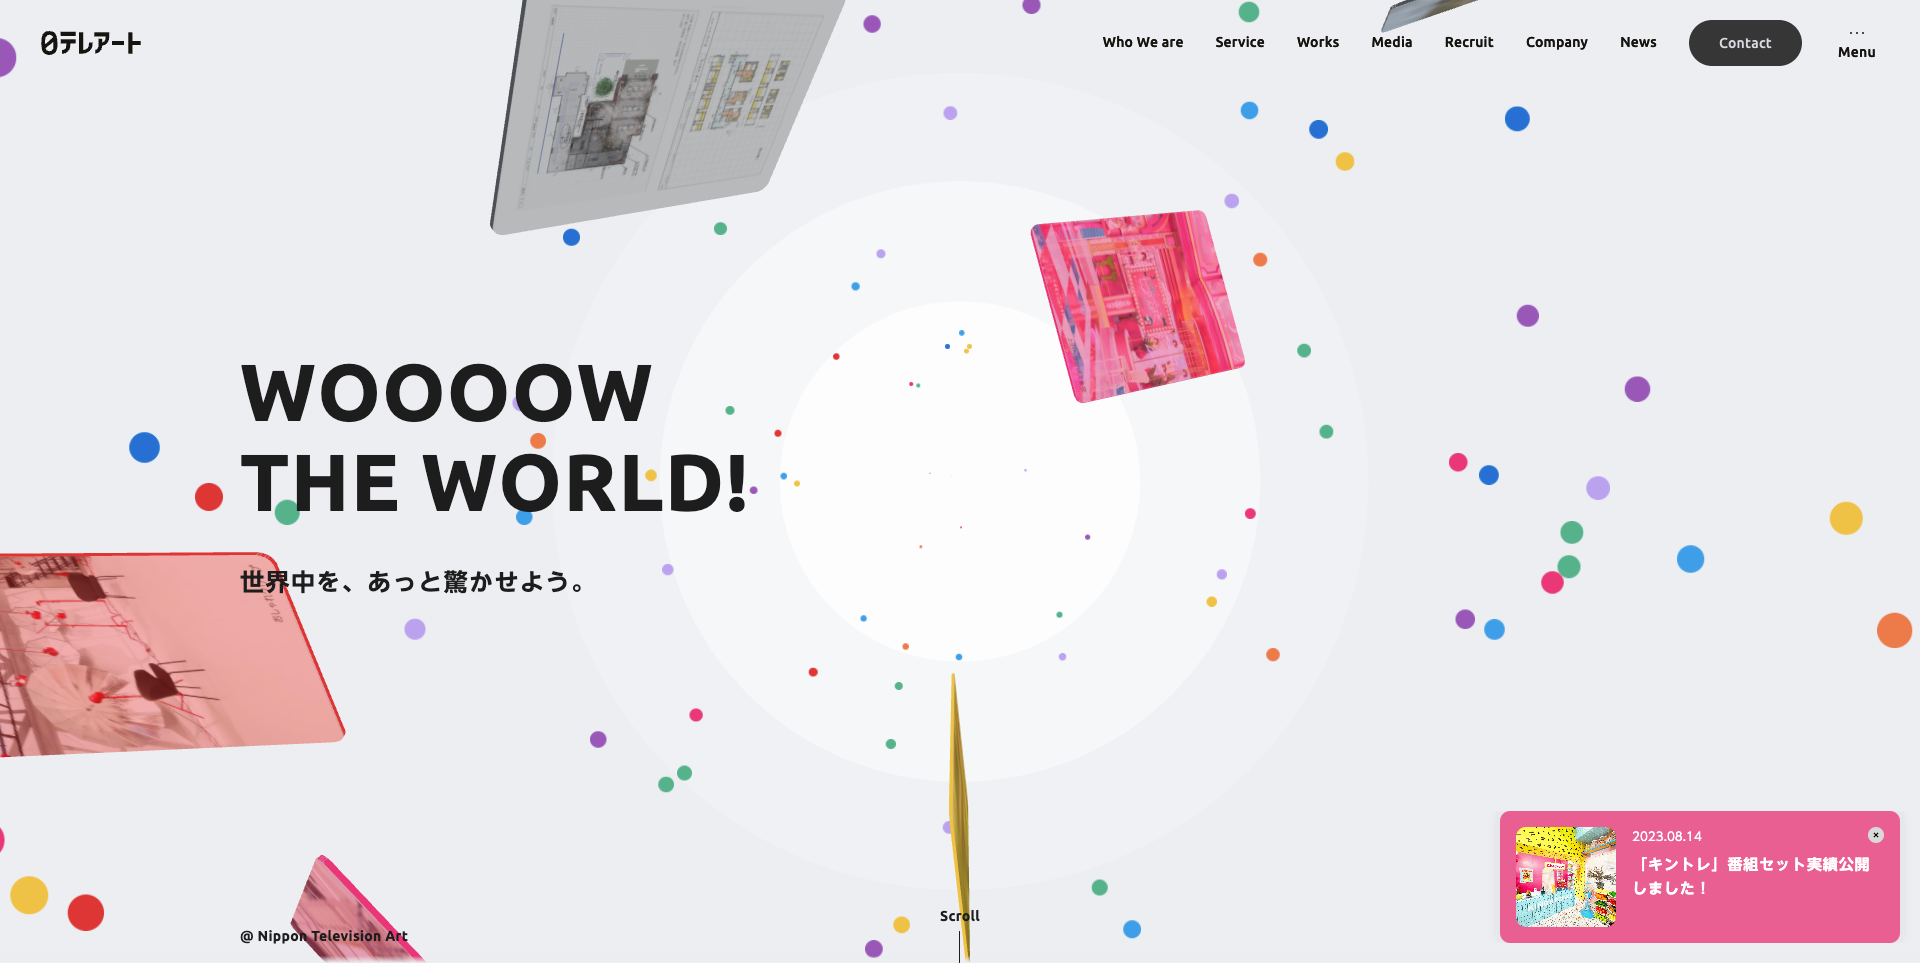 japan-web-design-examples-2023-08-18-17-28-48